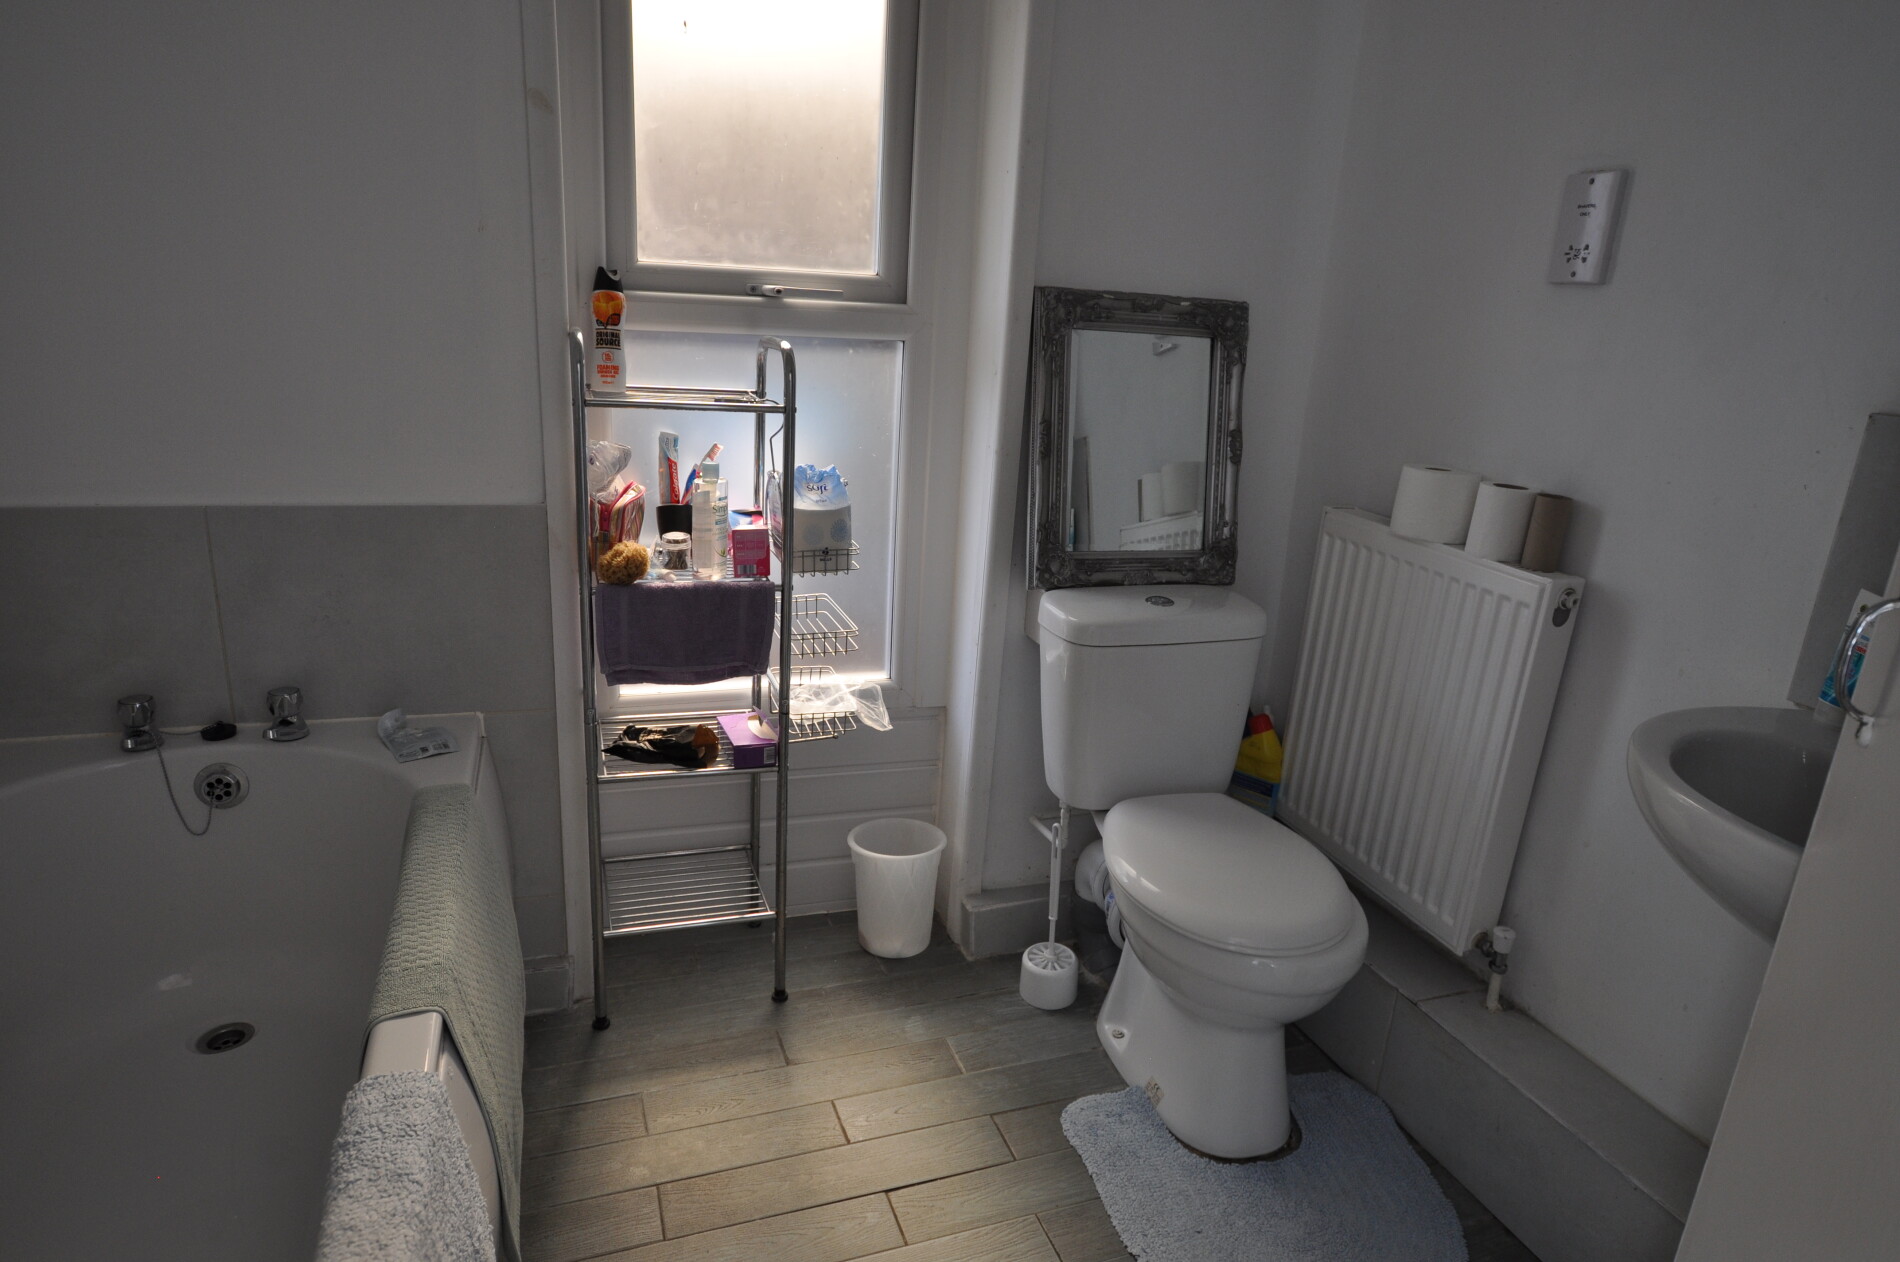 5 bedroom house for rent Coronation Avenue, Bath, BA2 2JY | UniHomes